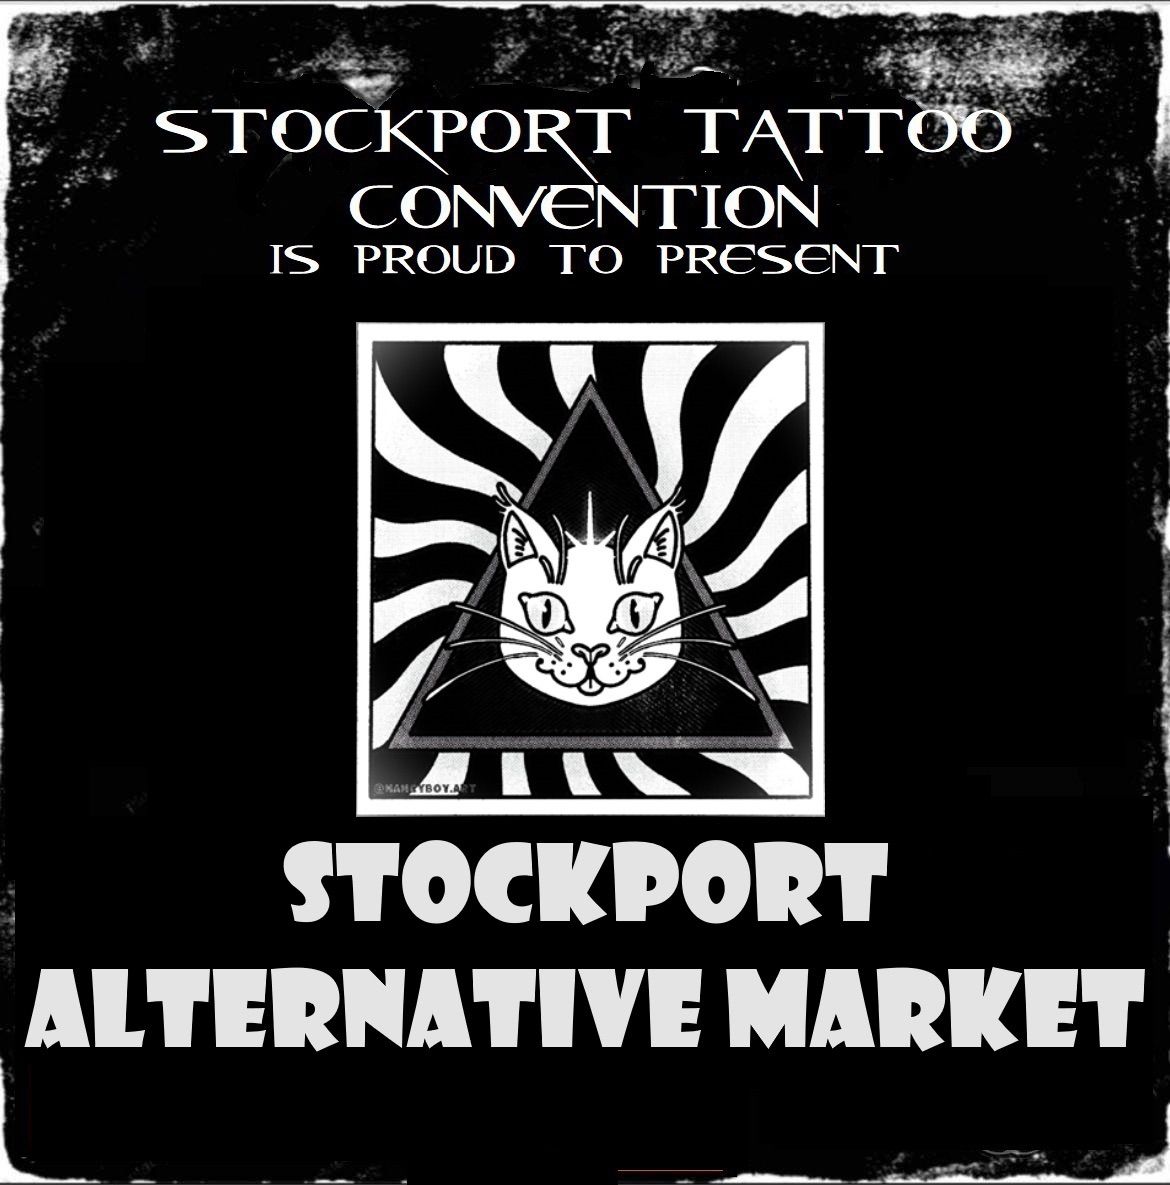 Stockport Alternative Market @ Stockport Tattoo Con 